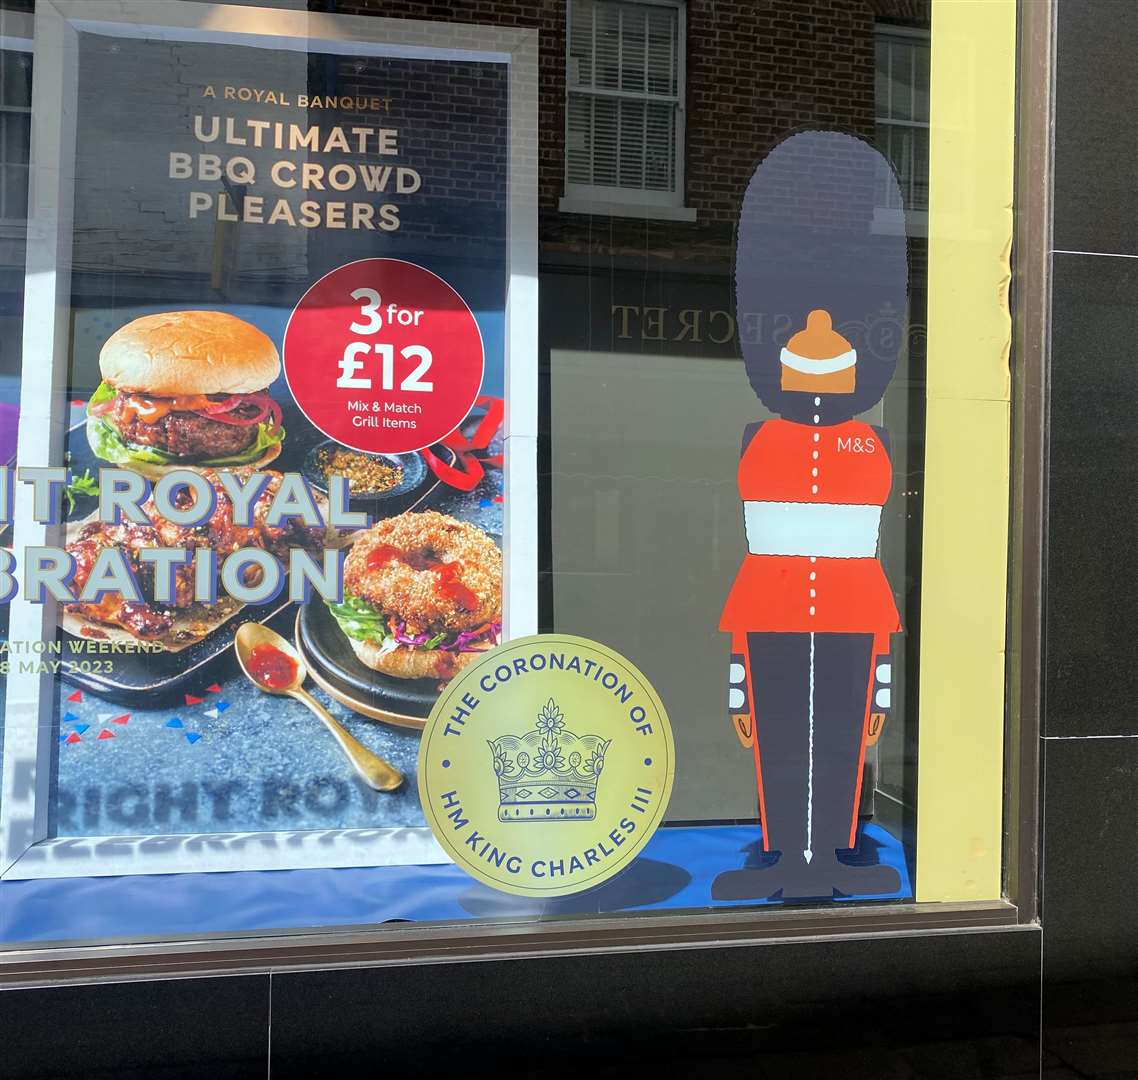 M&S put a window sticker of a guard in its display